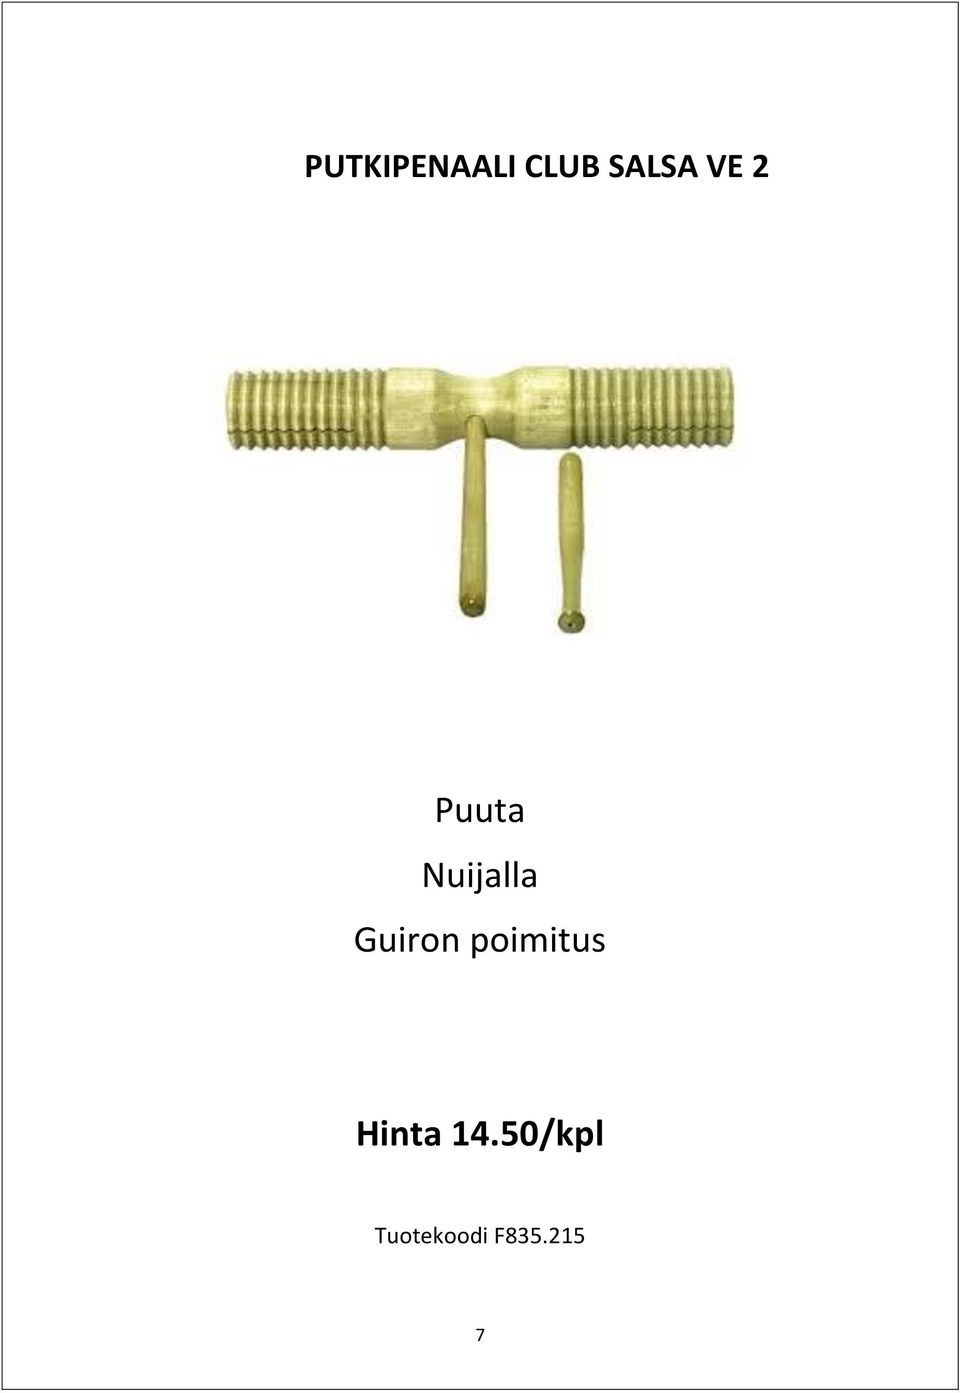 Guiron poimitus Hinta 14.